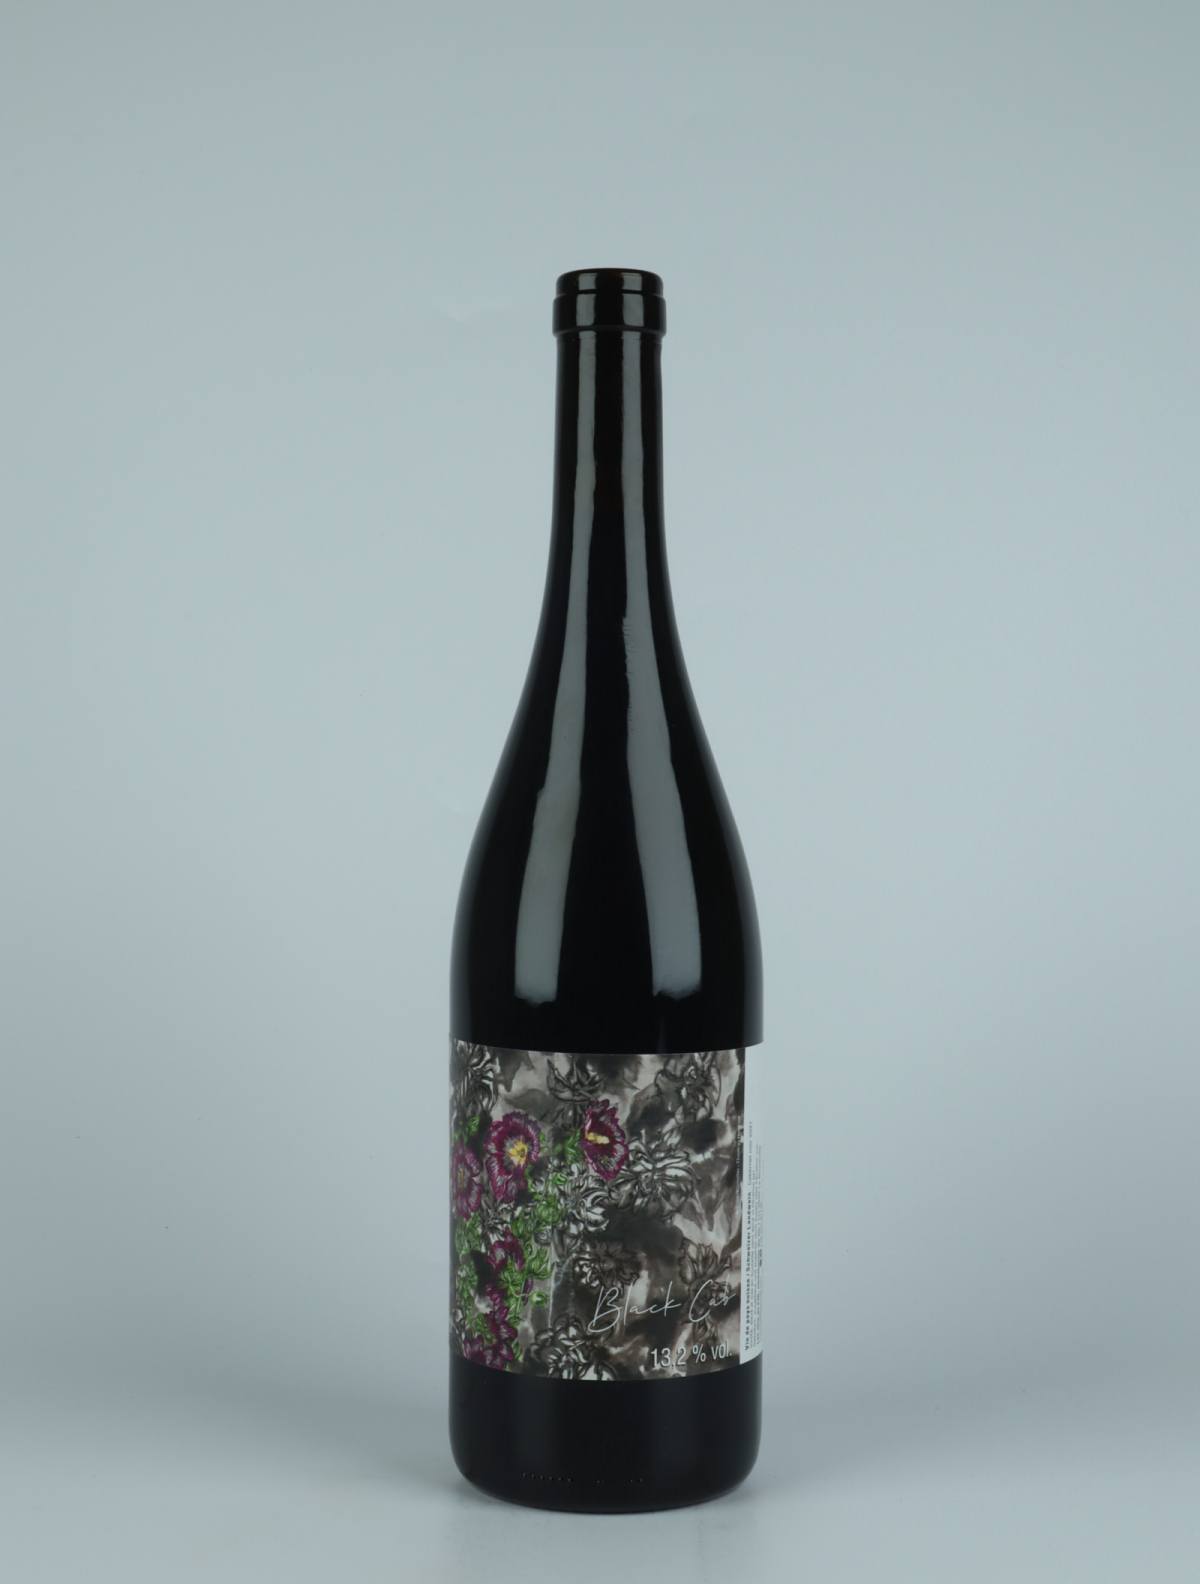 A bottle 2021 Cabernet Noir Red wine from Les Vins du Fab, Neuchâtel in Switzerland